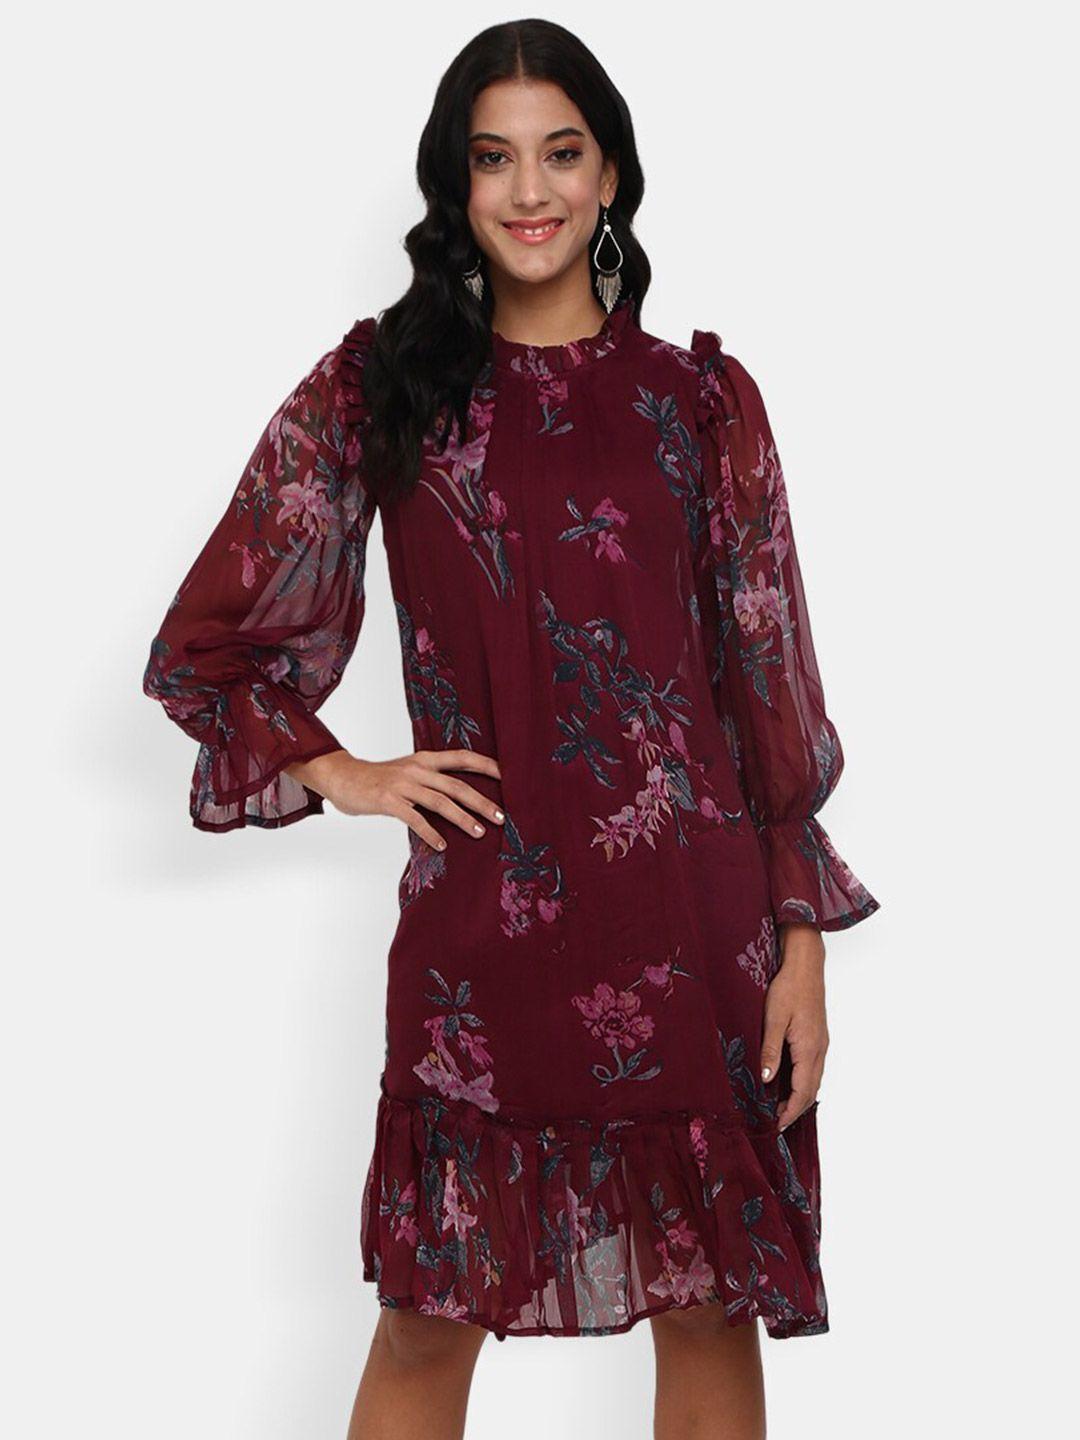 v-mart maroon floral sheath cotton dress